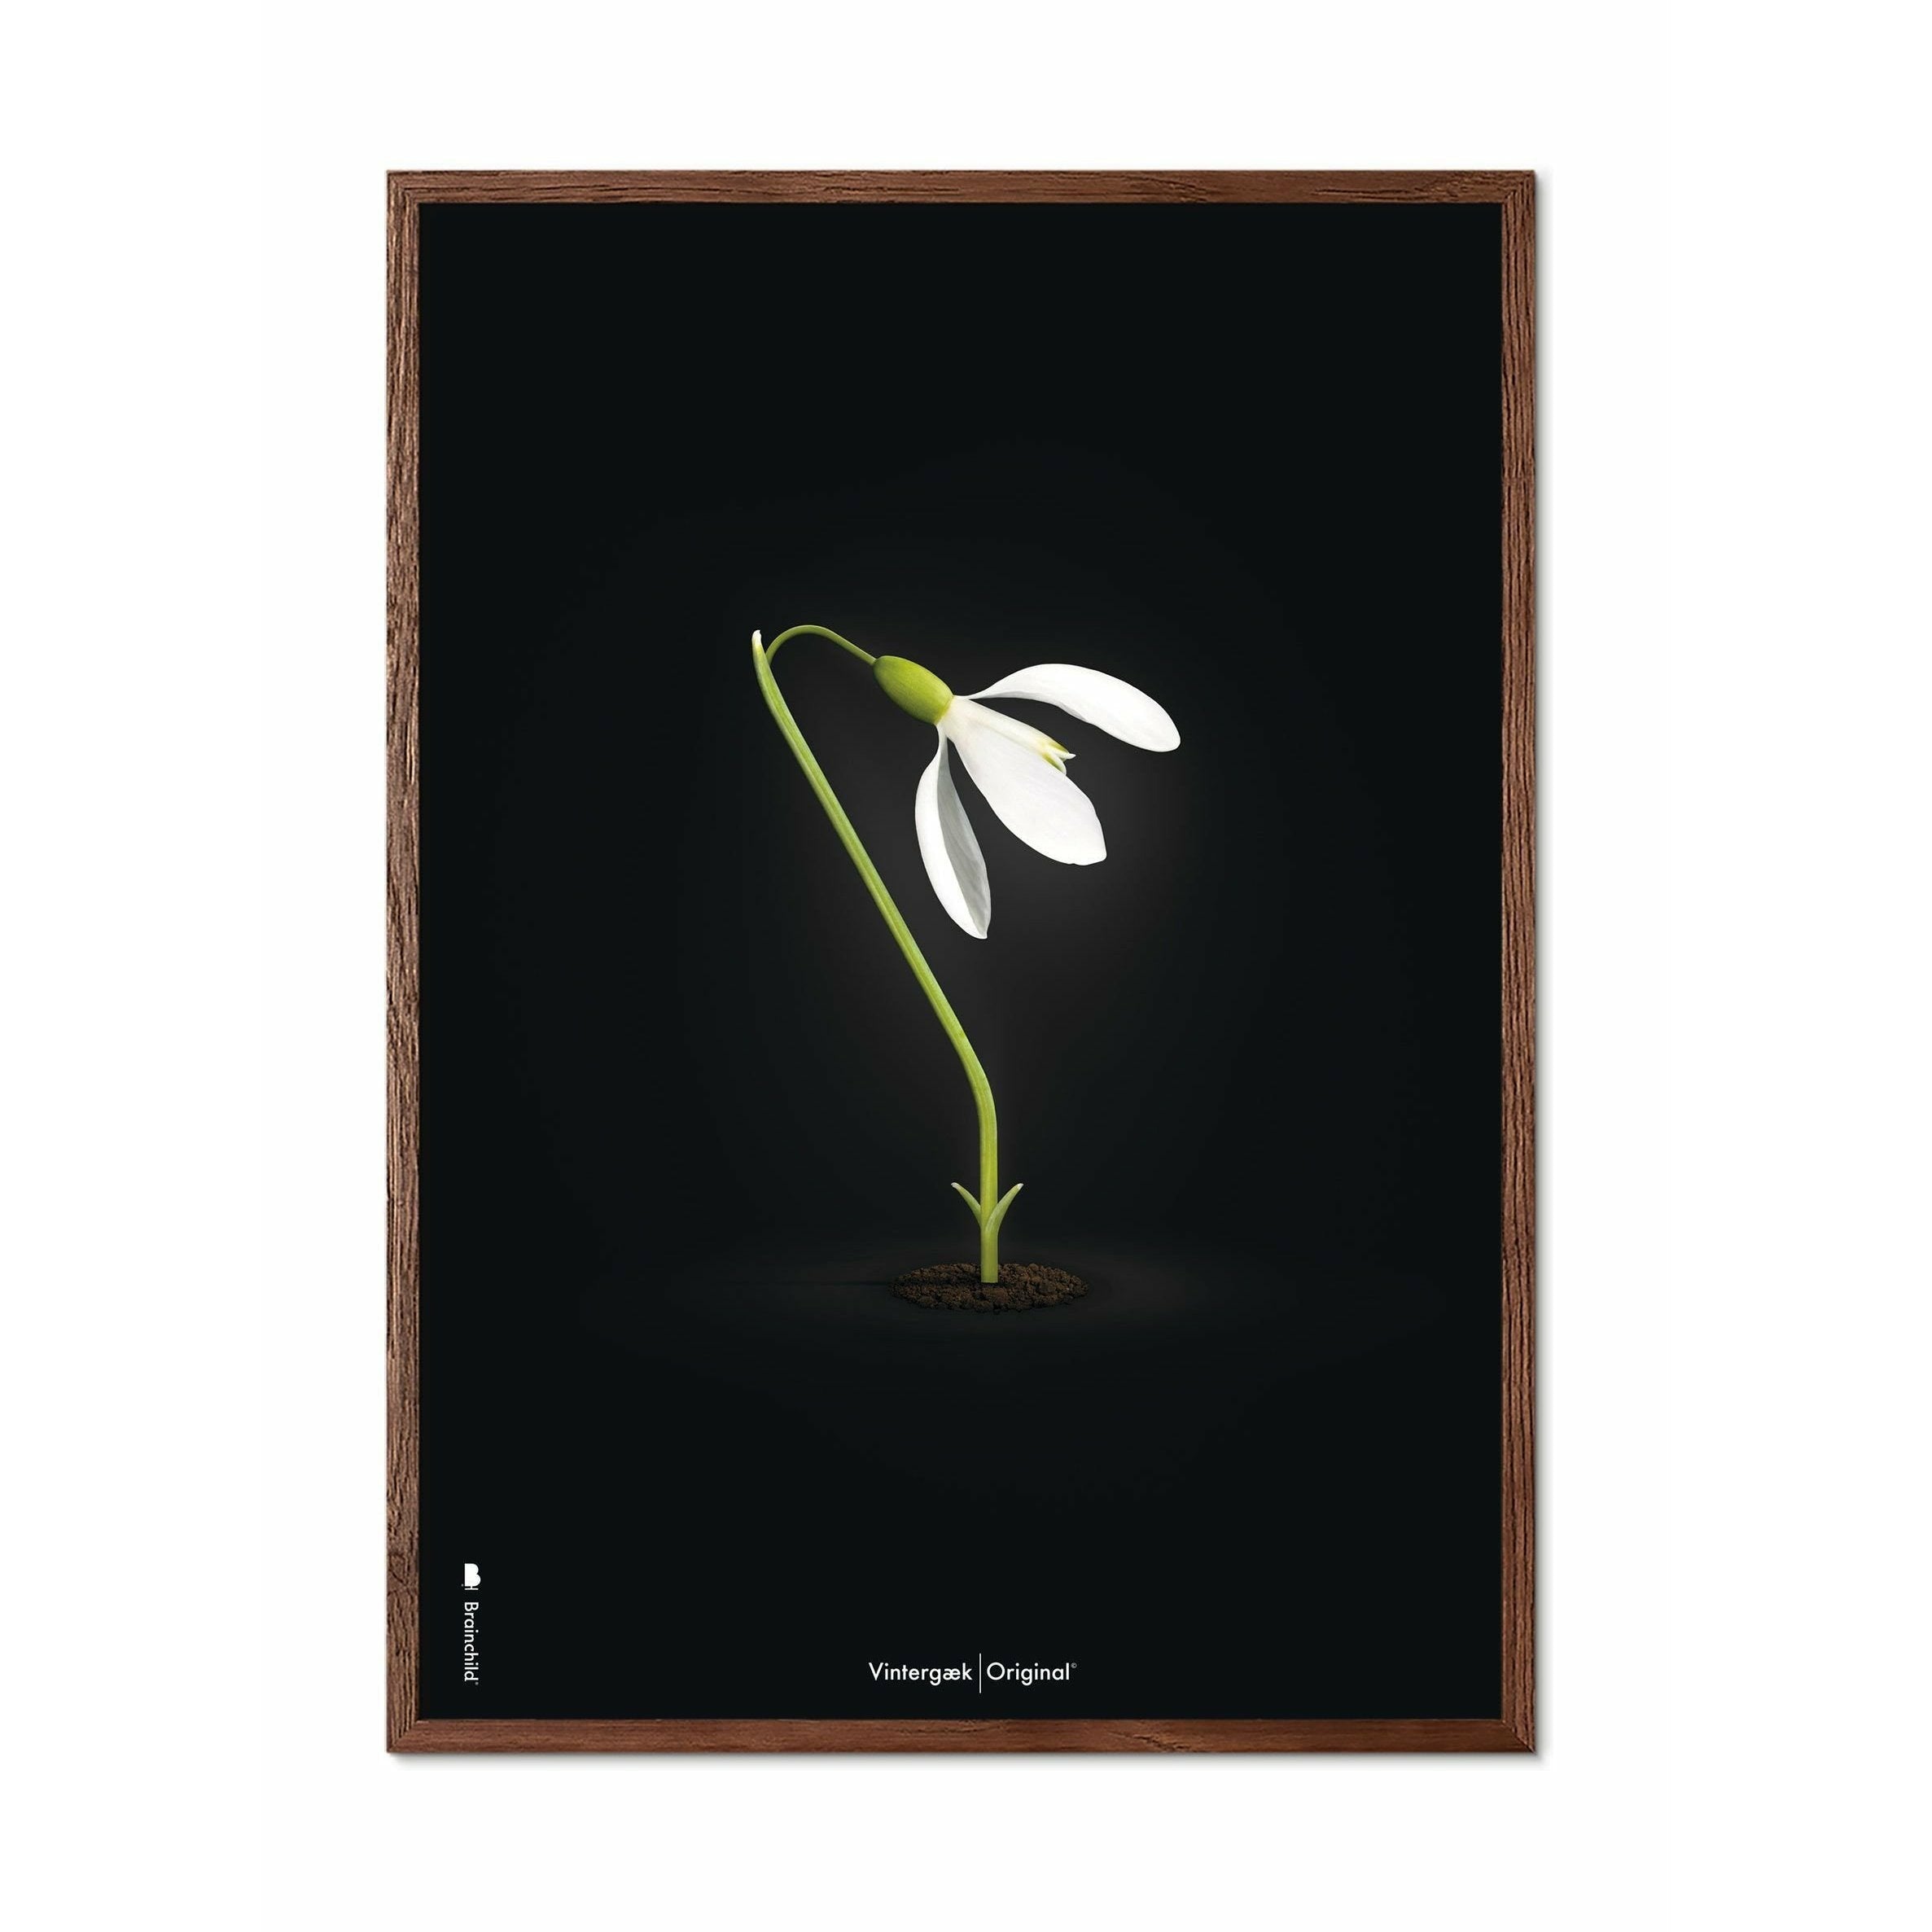 Brainchild Snowdrop Classic Poster, Frame Made Of Dark Wood 70x100 Cm, Black Background